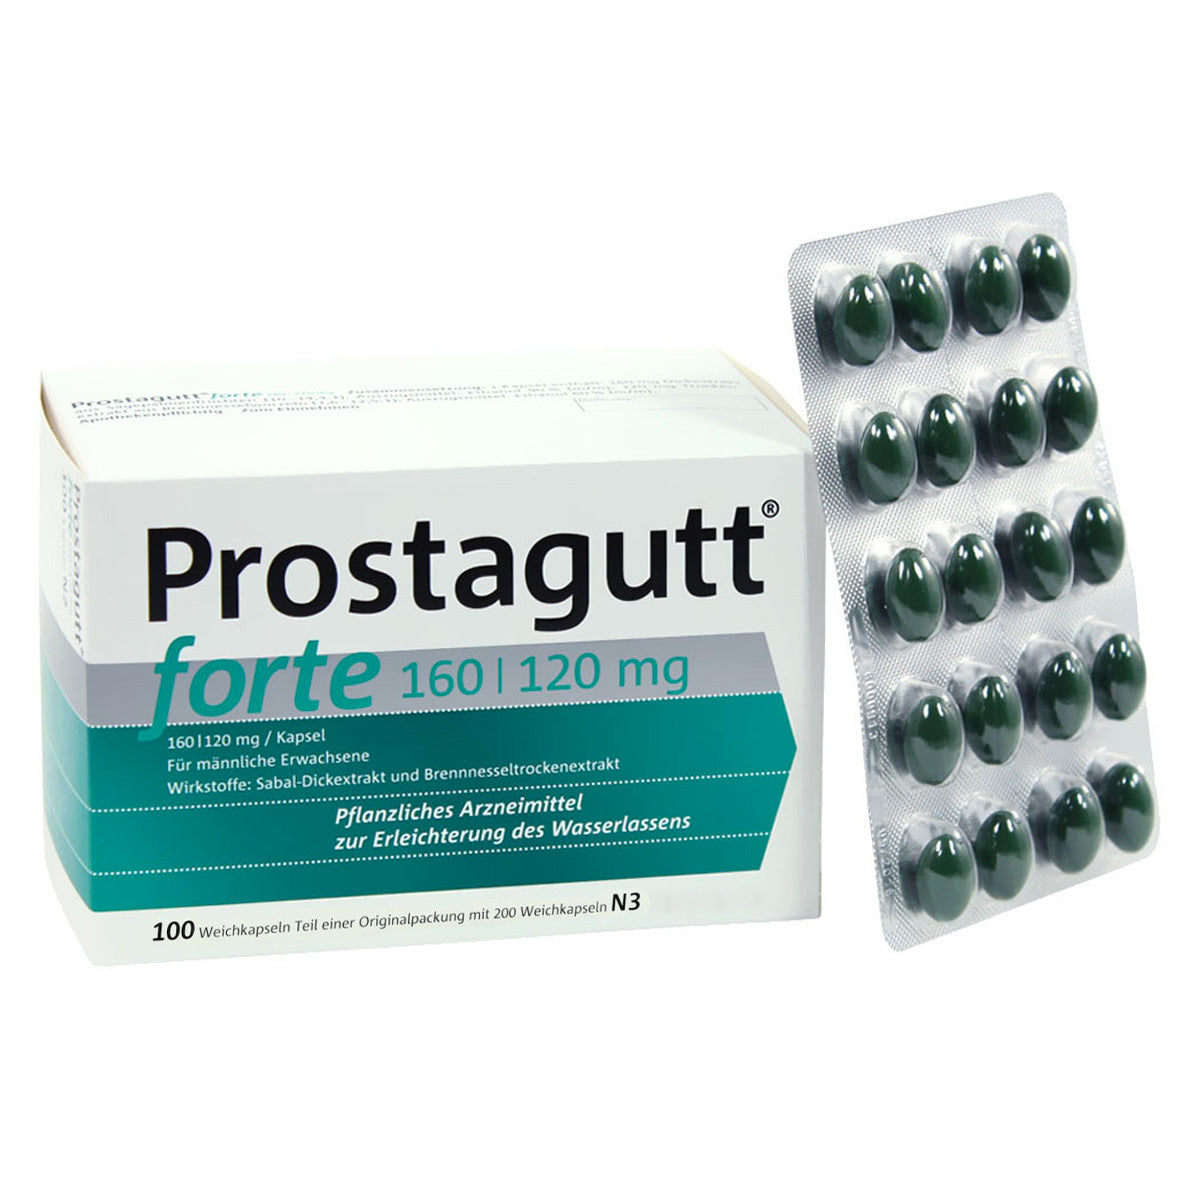 Primary image of Prostagutt Forte Capsules